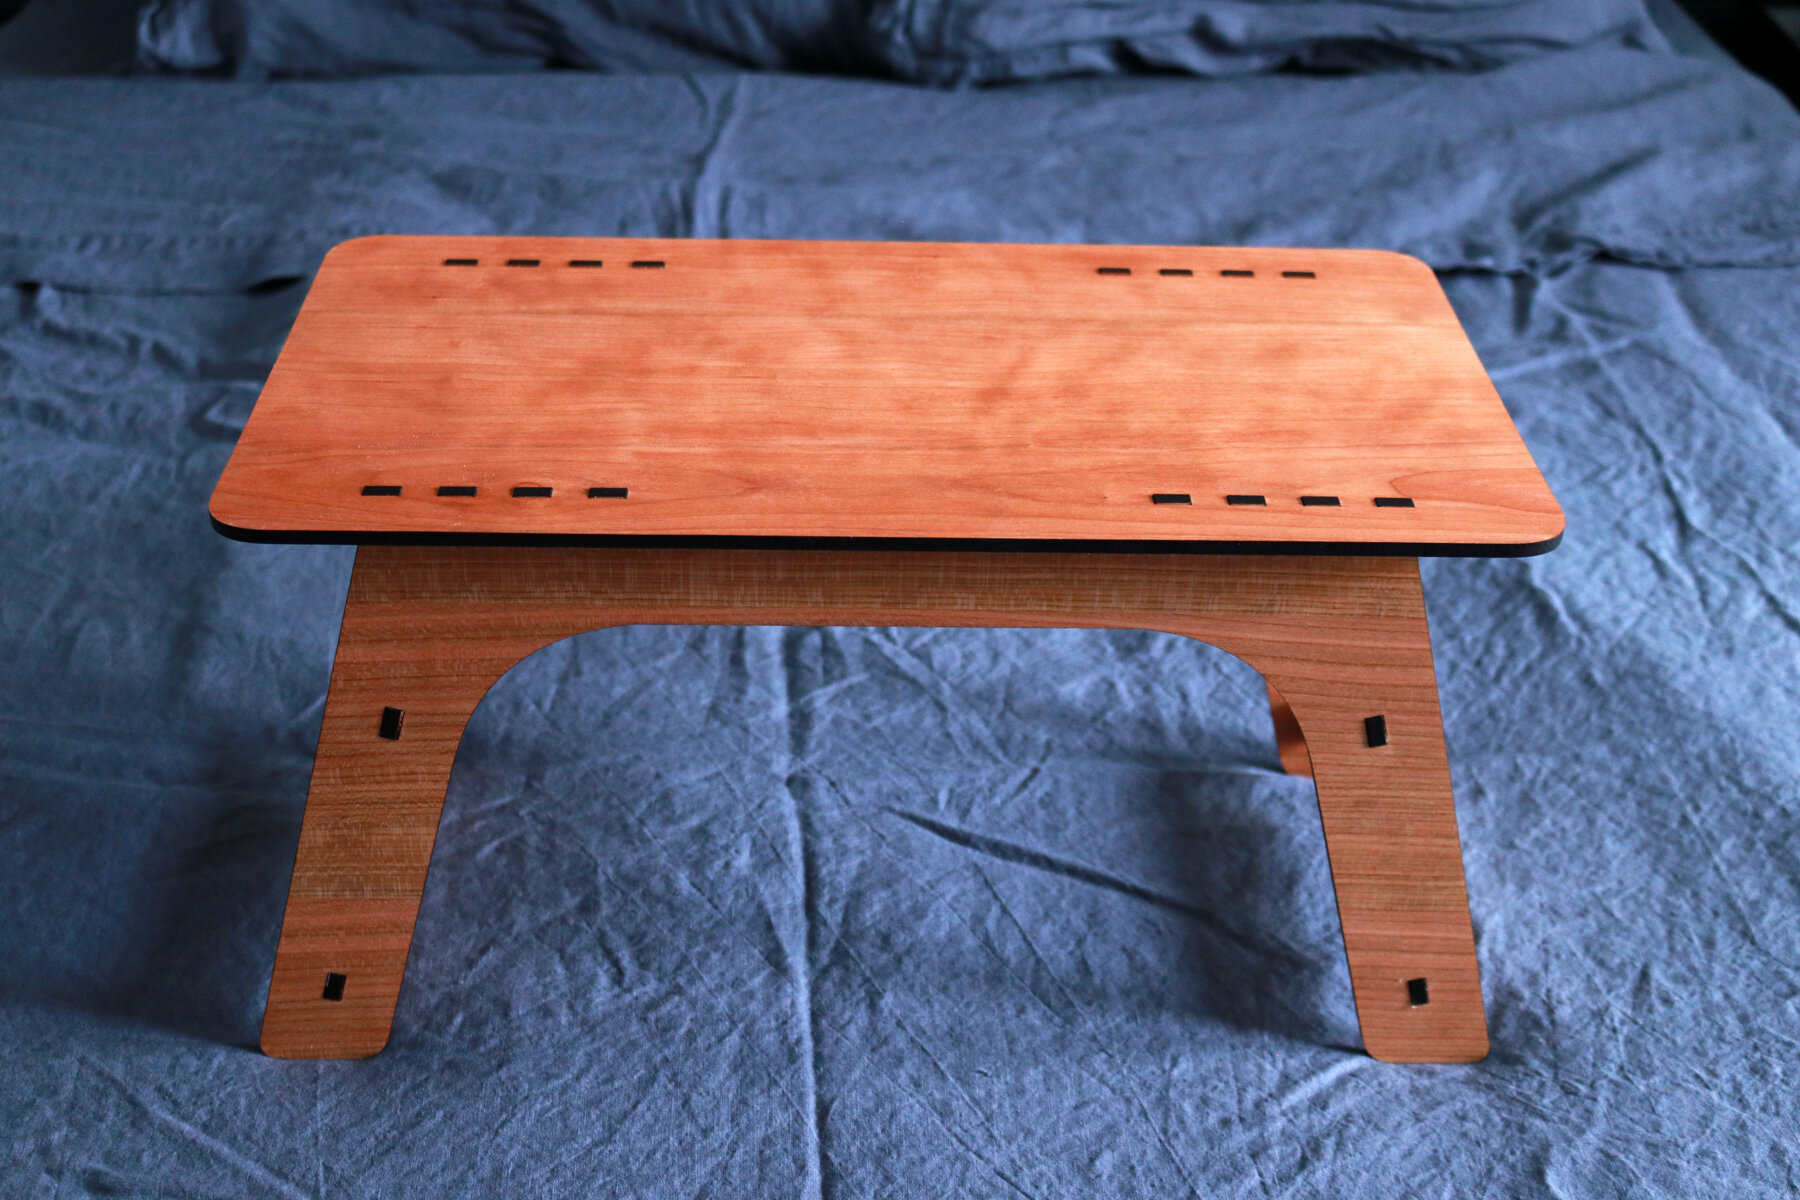 041_Minimal-Personal-Wood-Table-03.jpg